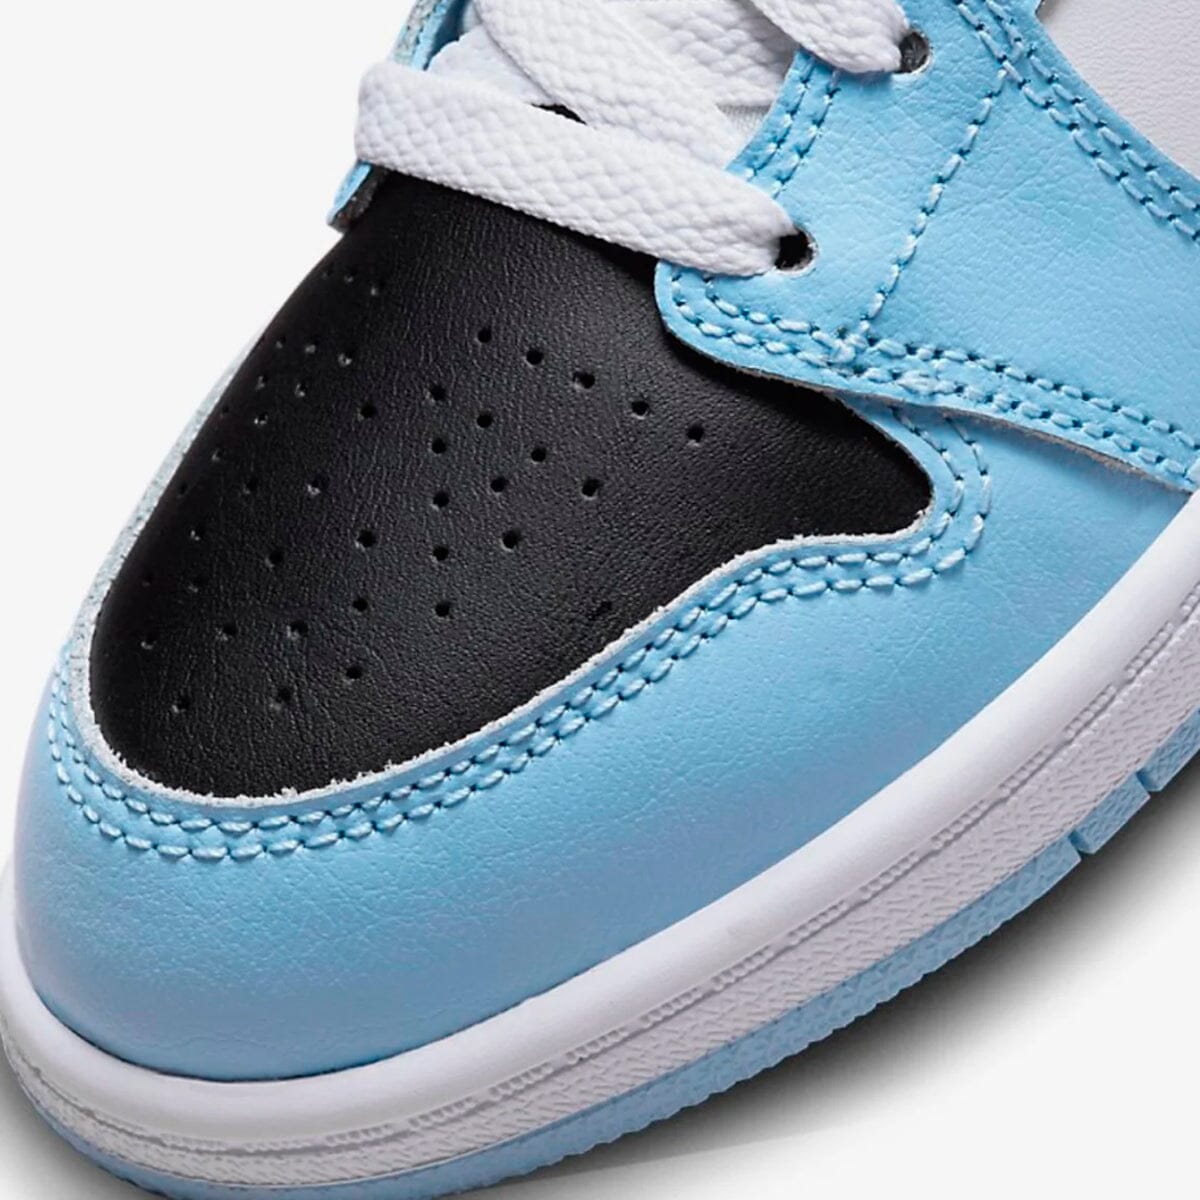 Air Jordan 1 Mid Ice Blue Blizz Sneakers 